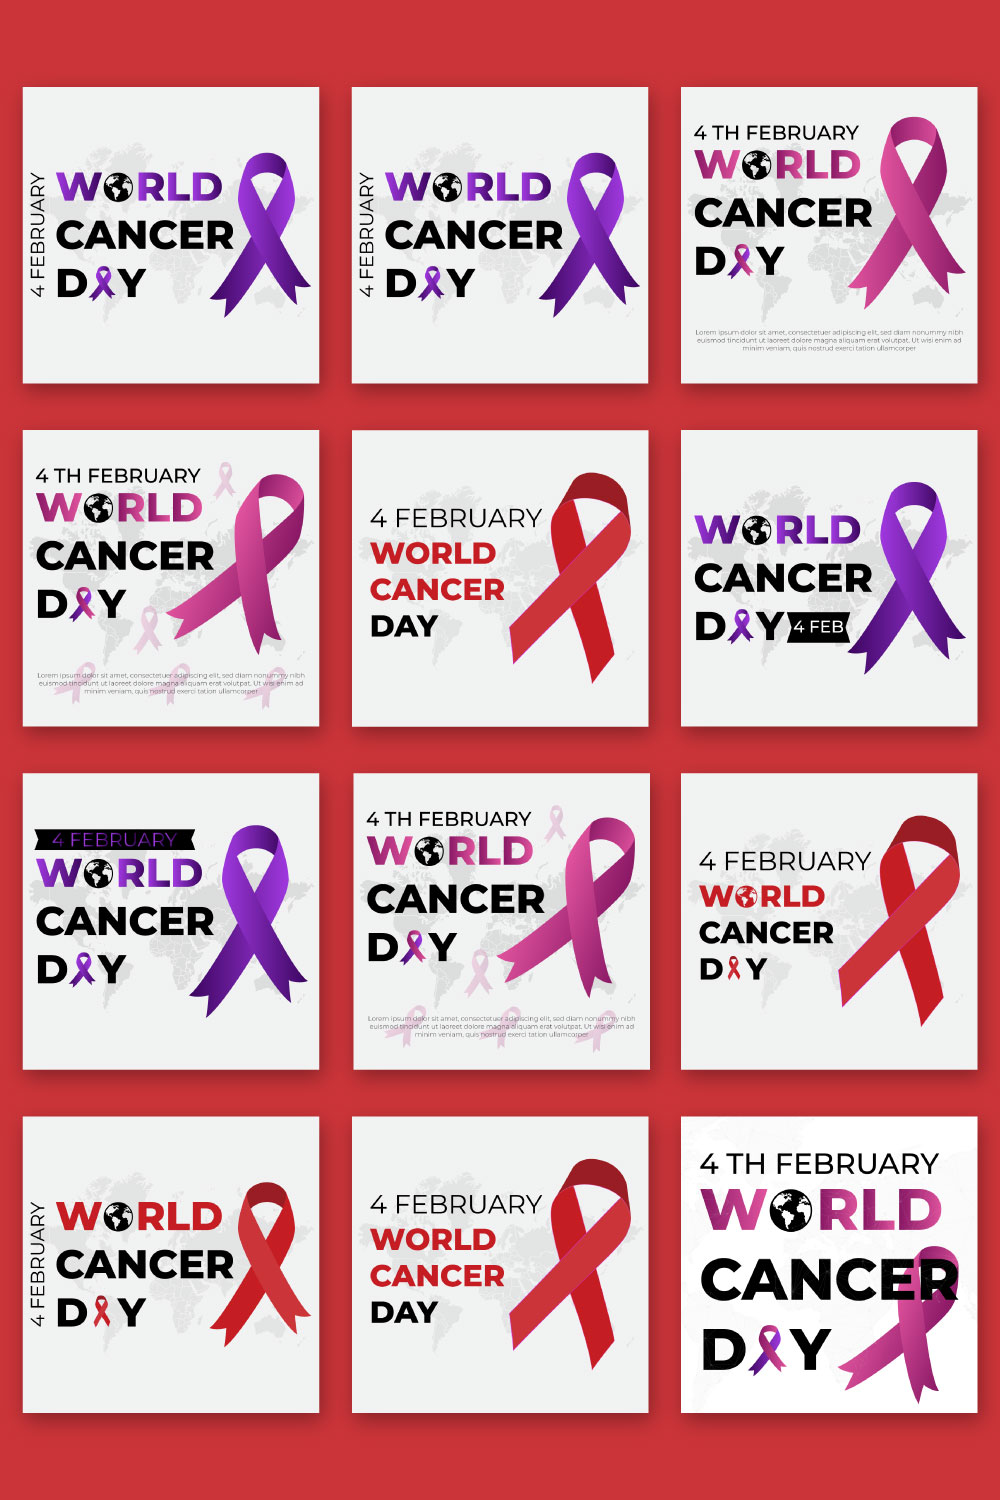 World Cancer Day Background Design pinterest image.